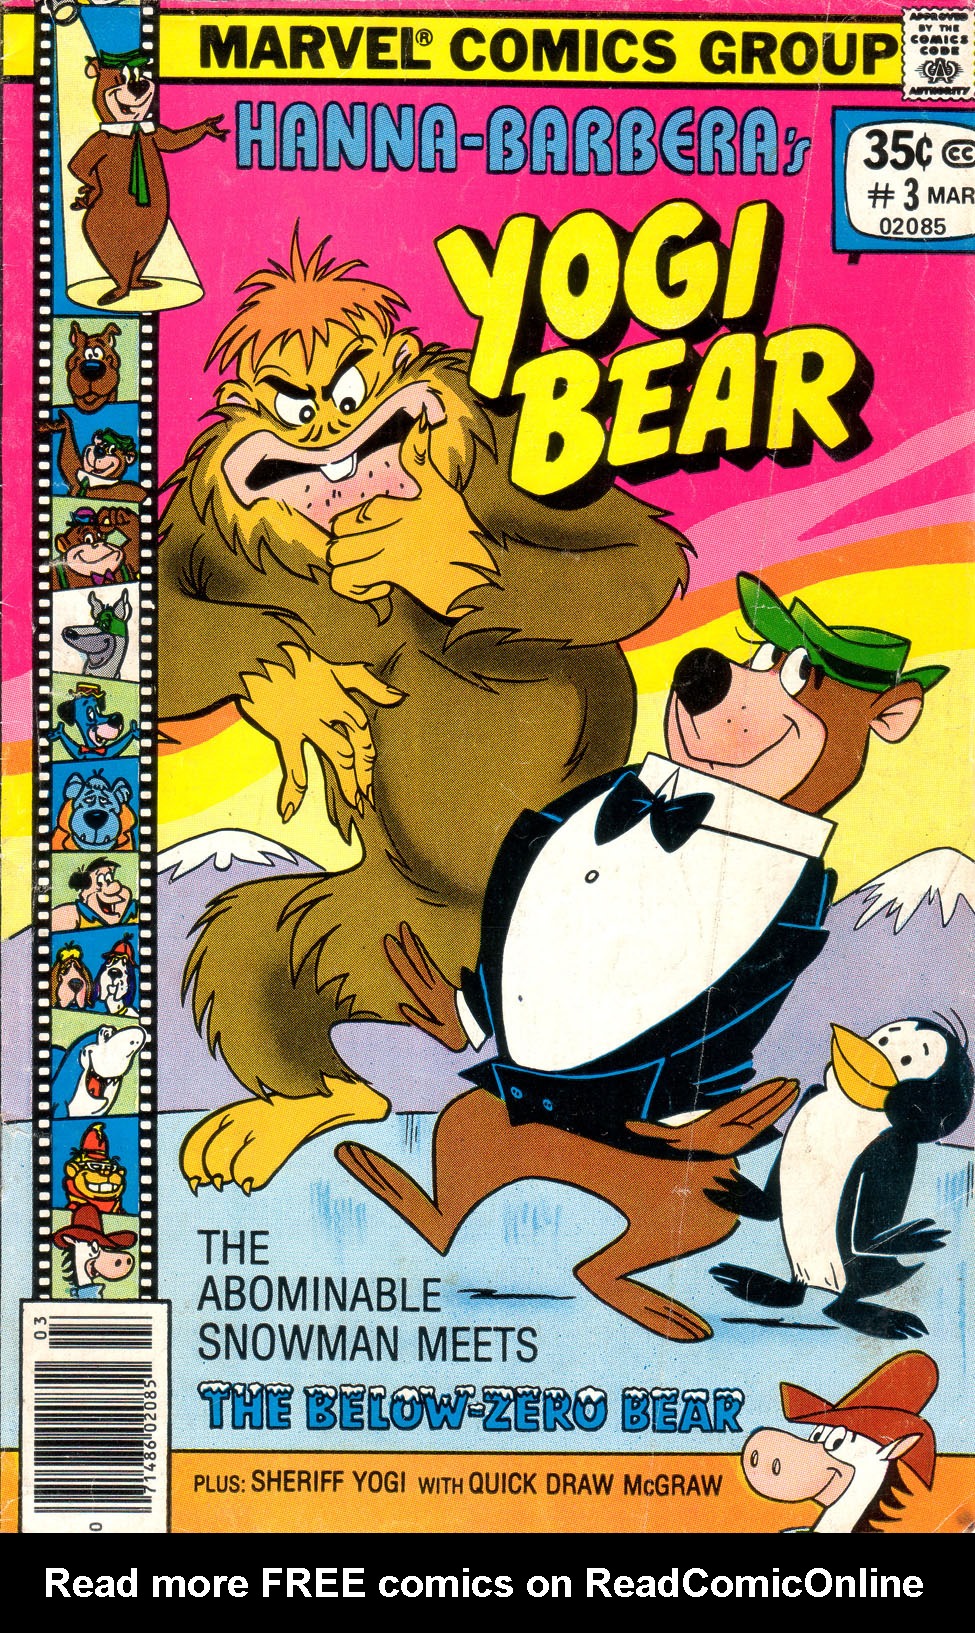 975px x 1633px - Yogi Bear Issue 3 | Read Yogi Bear Issue 3 comic online in high quality.  Read Full Comic online for free - Read comics online in high quality  .|viewcomiconline.com